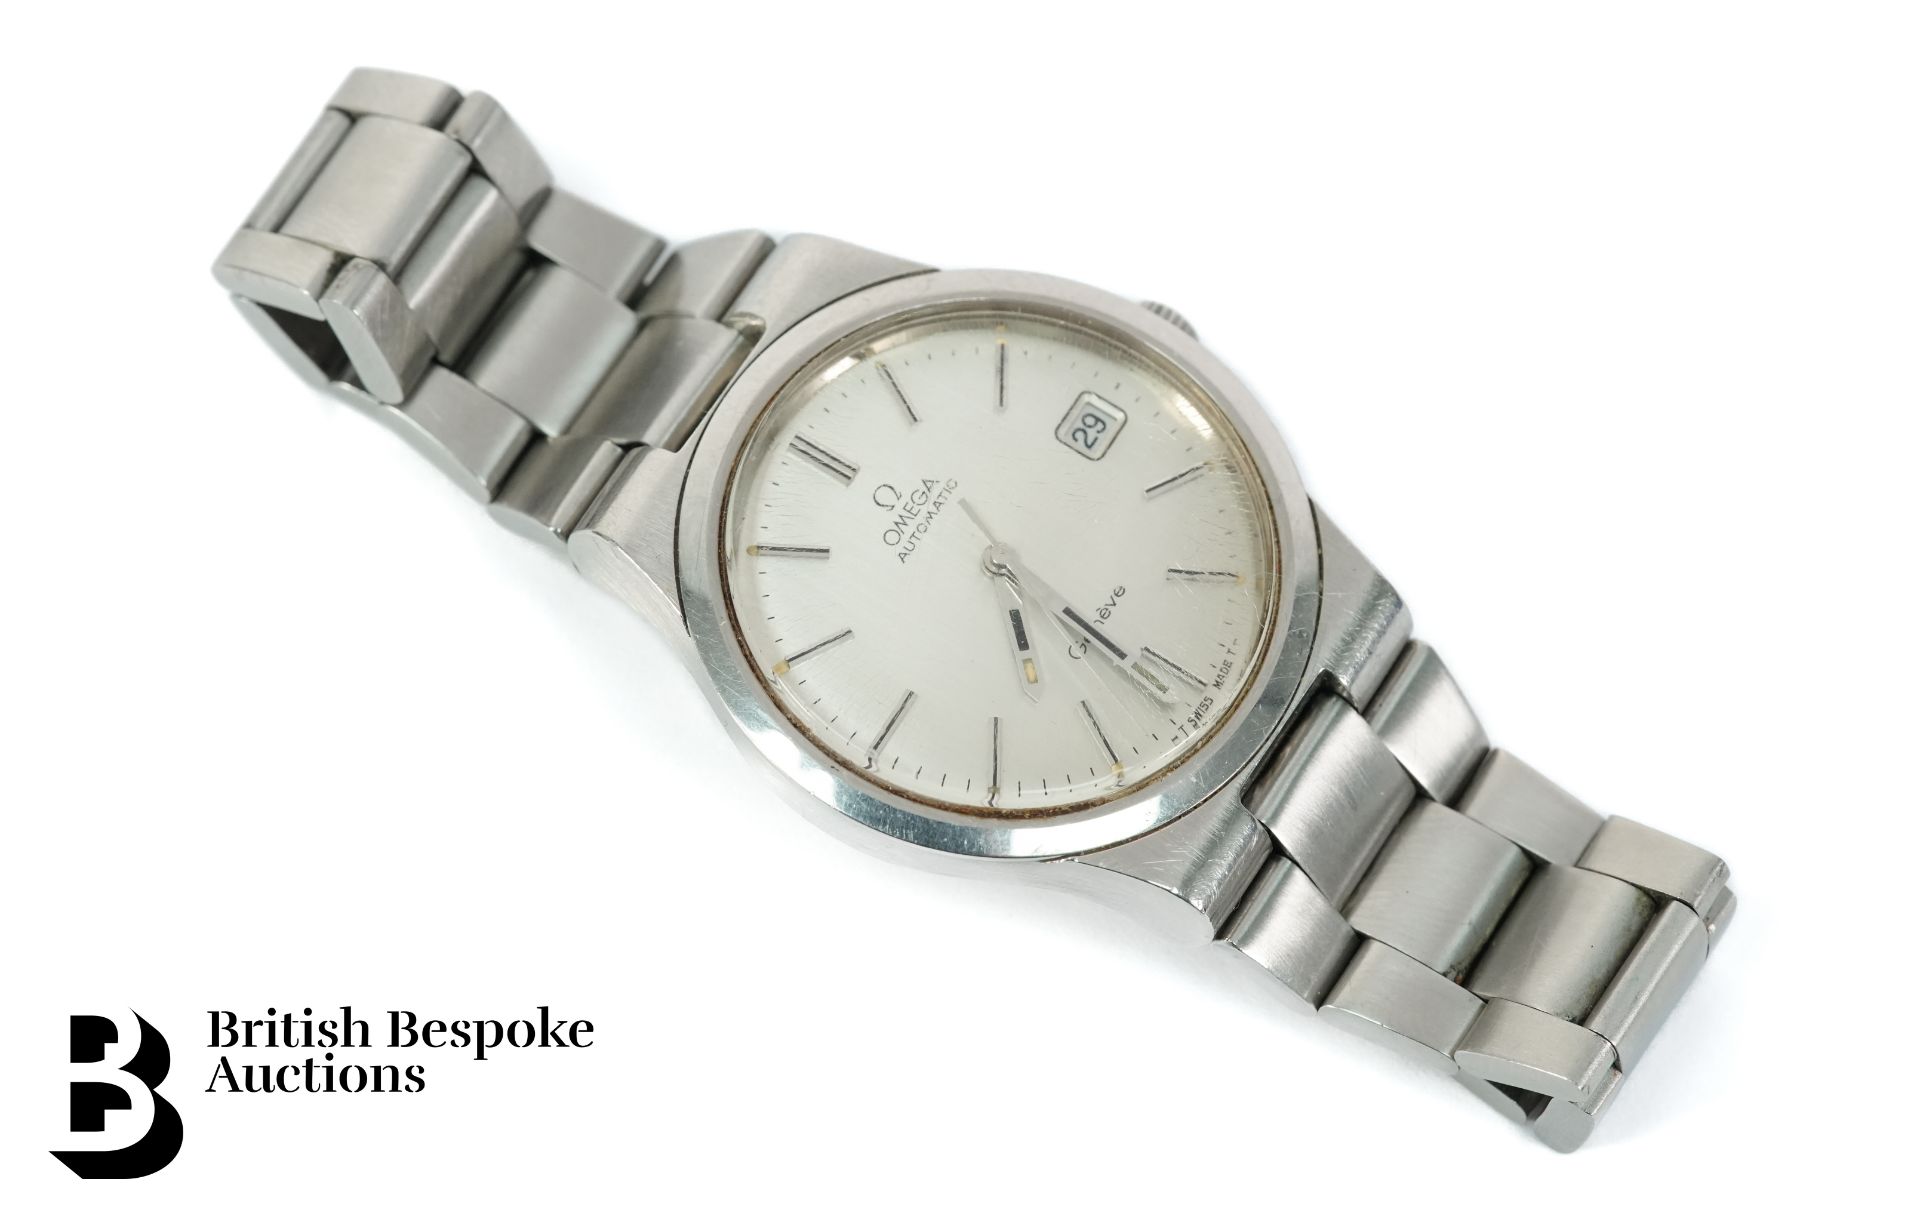 Gentleman's Omega Automatic Geneve Wrist Watch - Image 2 of 3